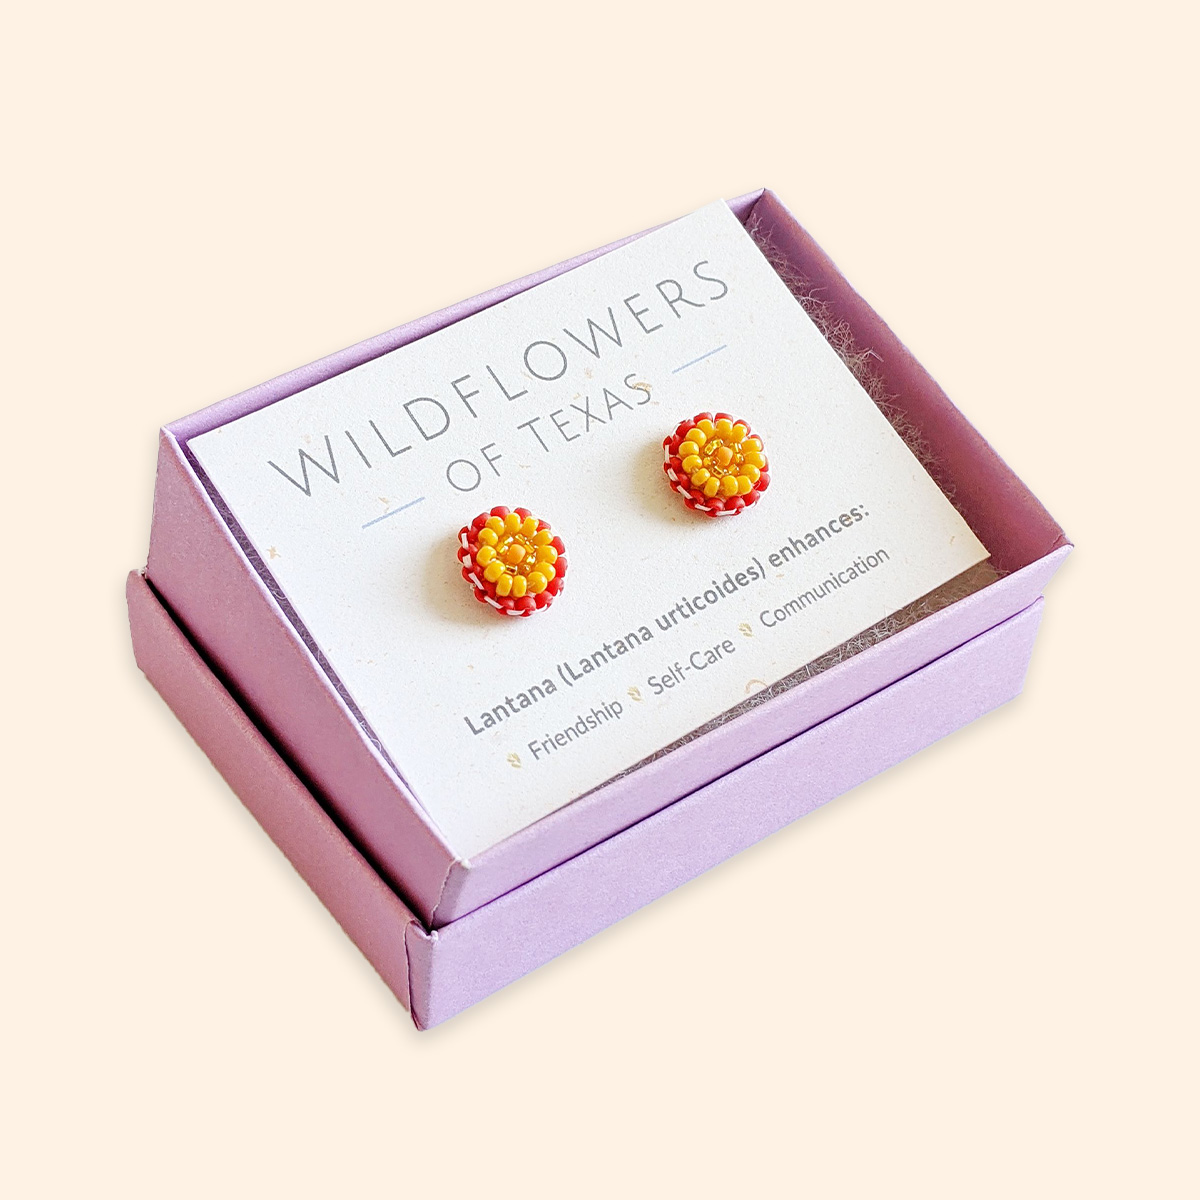 Wildflower Earrings